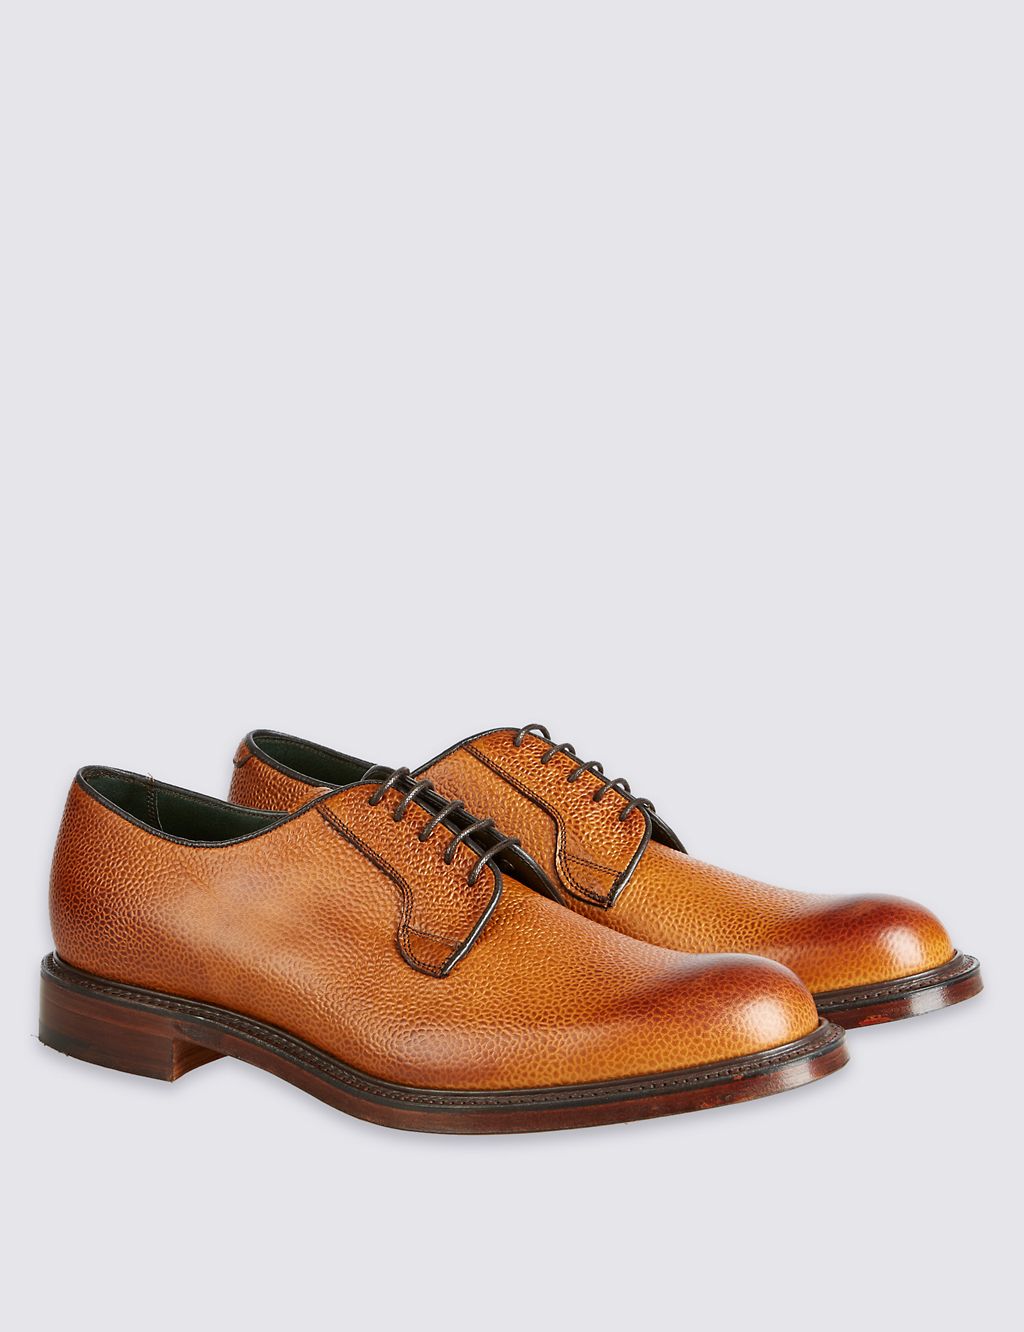 Luxury Derby Shoe in Tan Scotchgrain Leather 3 of 5